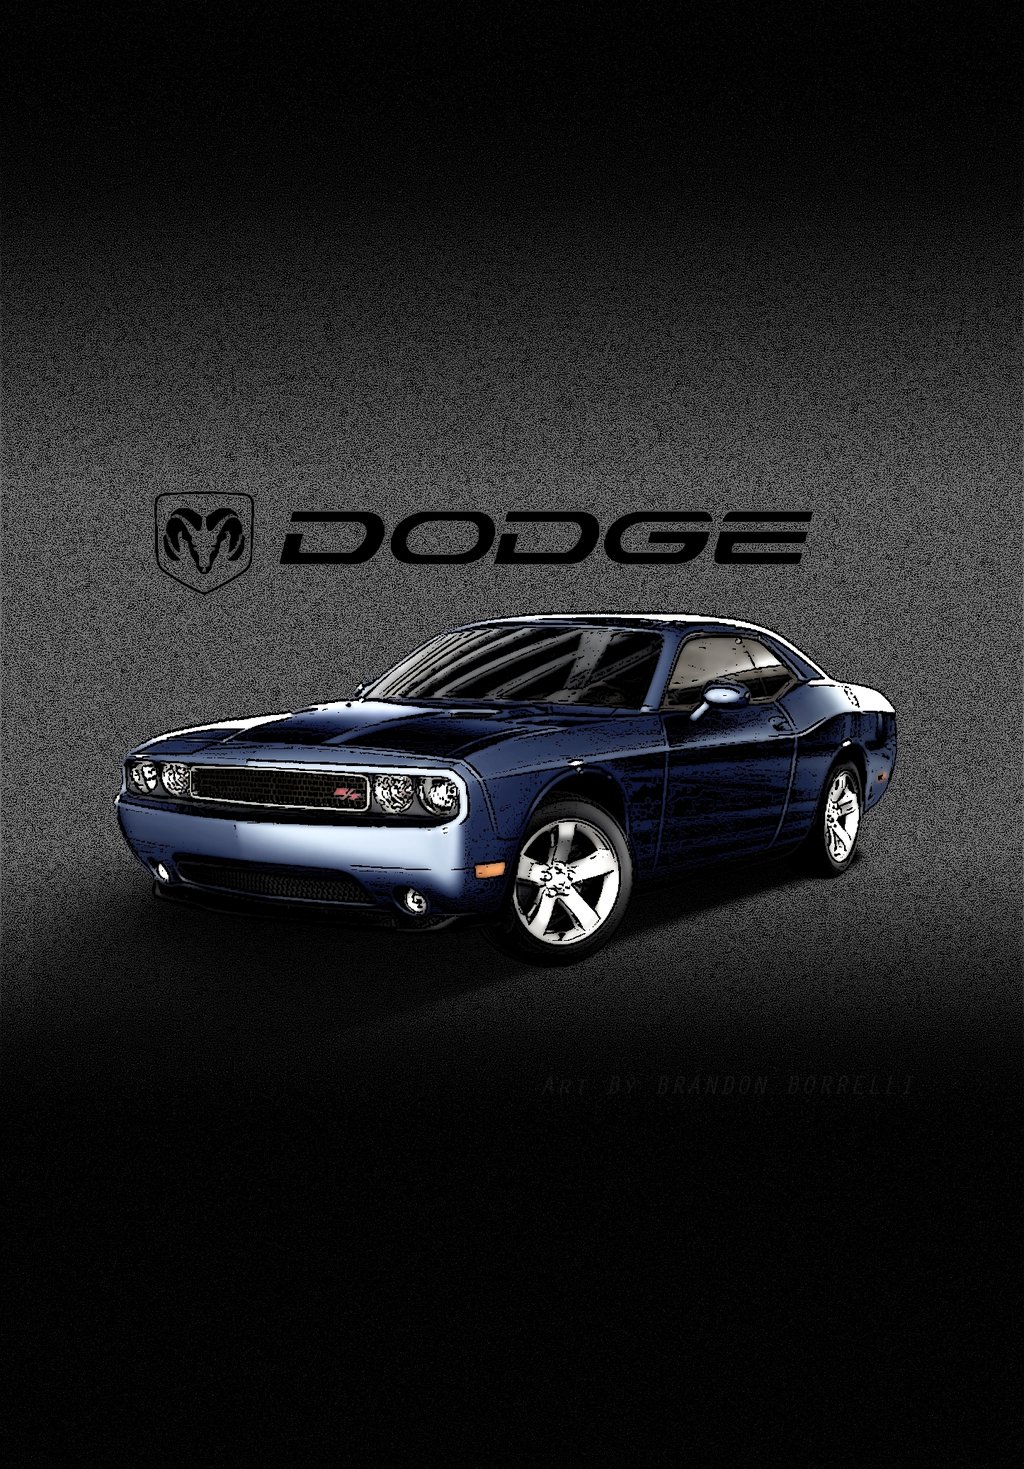 Dodge Challenger Mobile Wallpaper Lock Screen By Brrelli